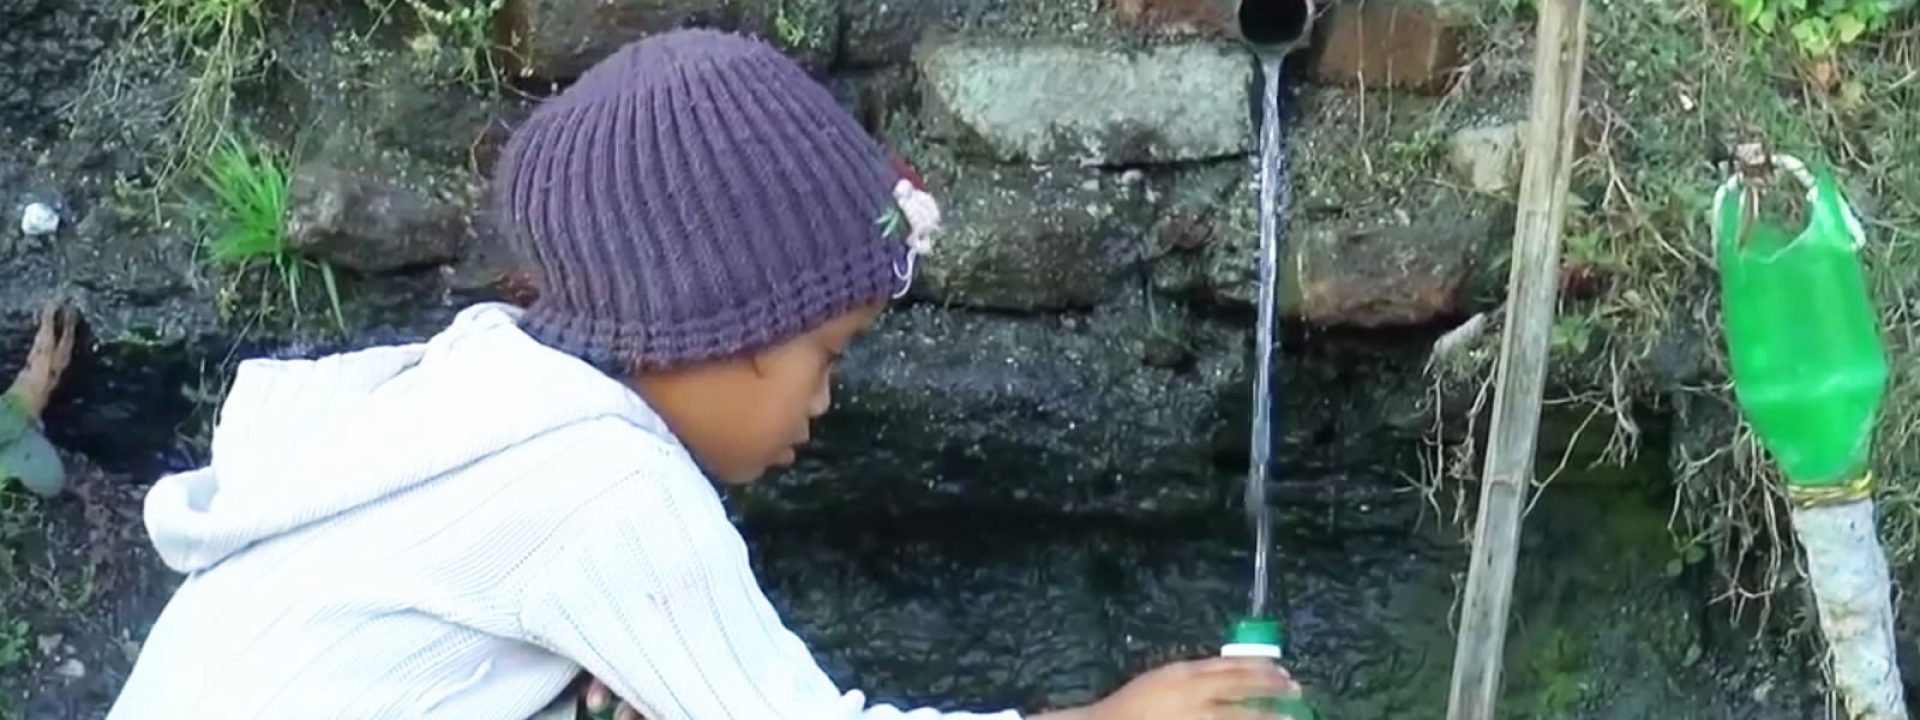 Water in Kathmandu: a crisis in an area of abundance